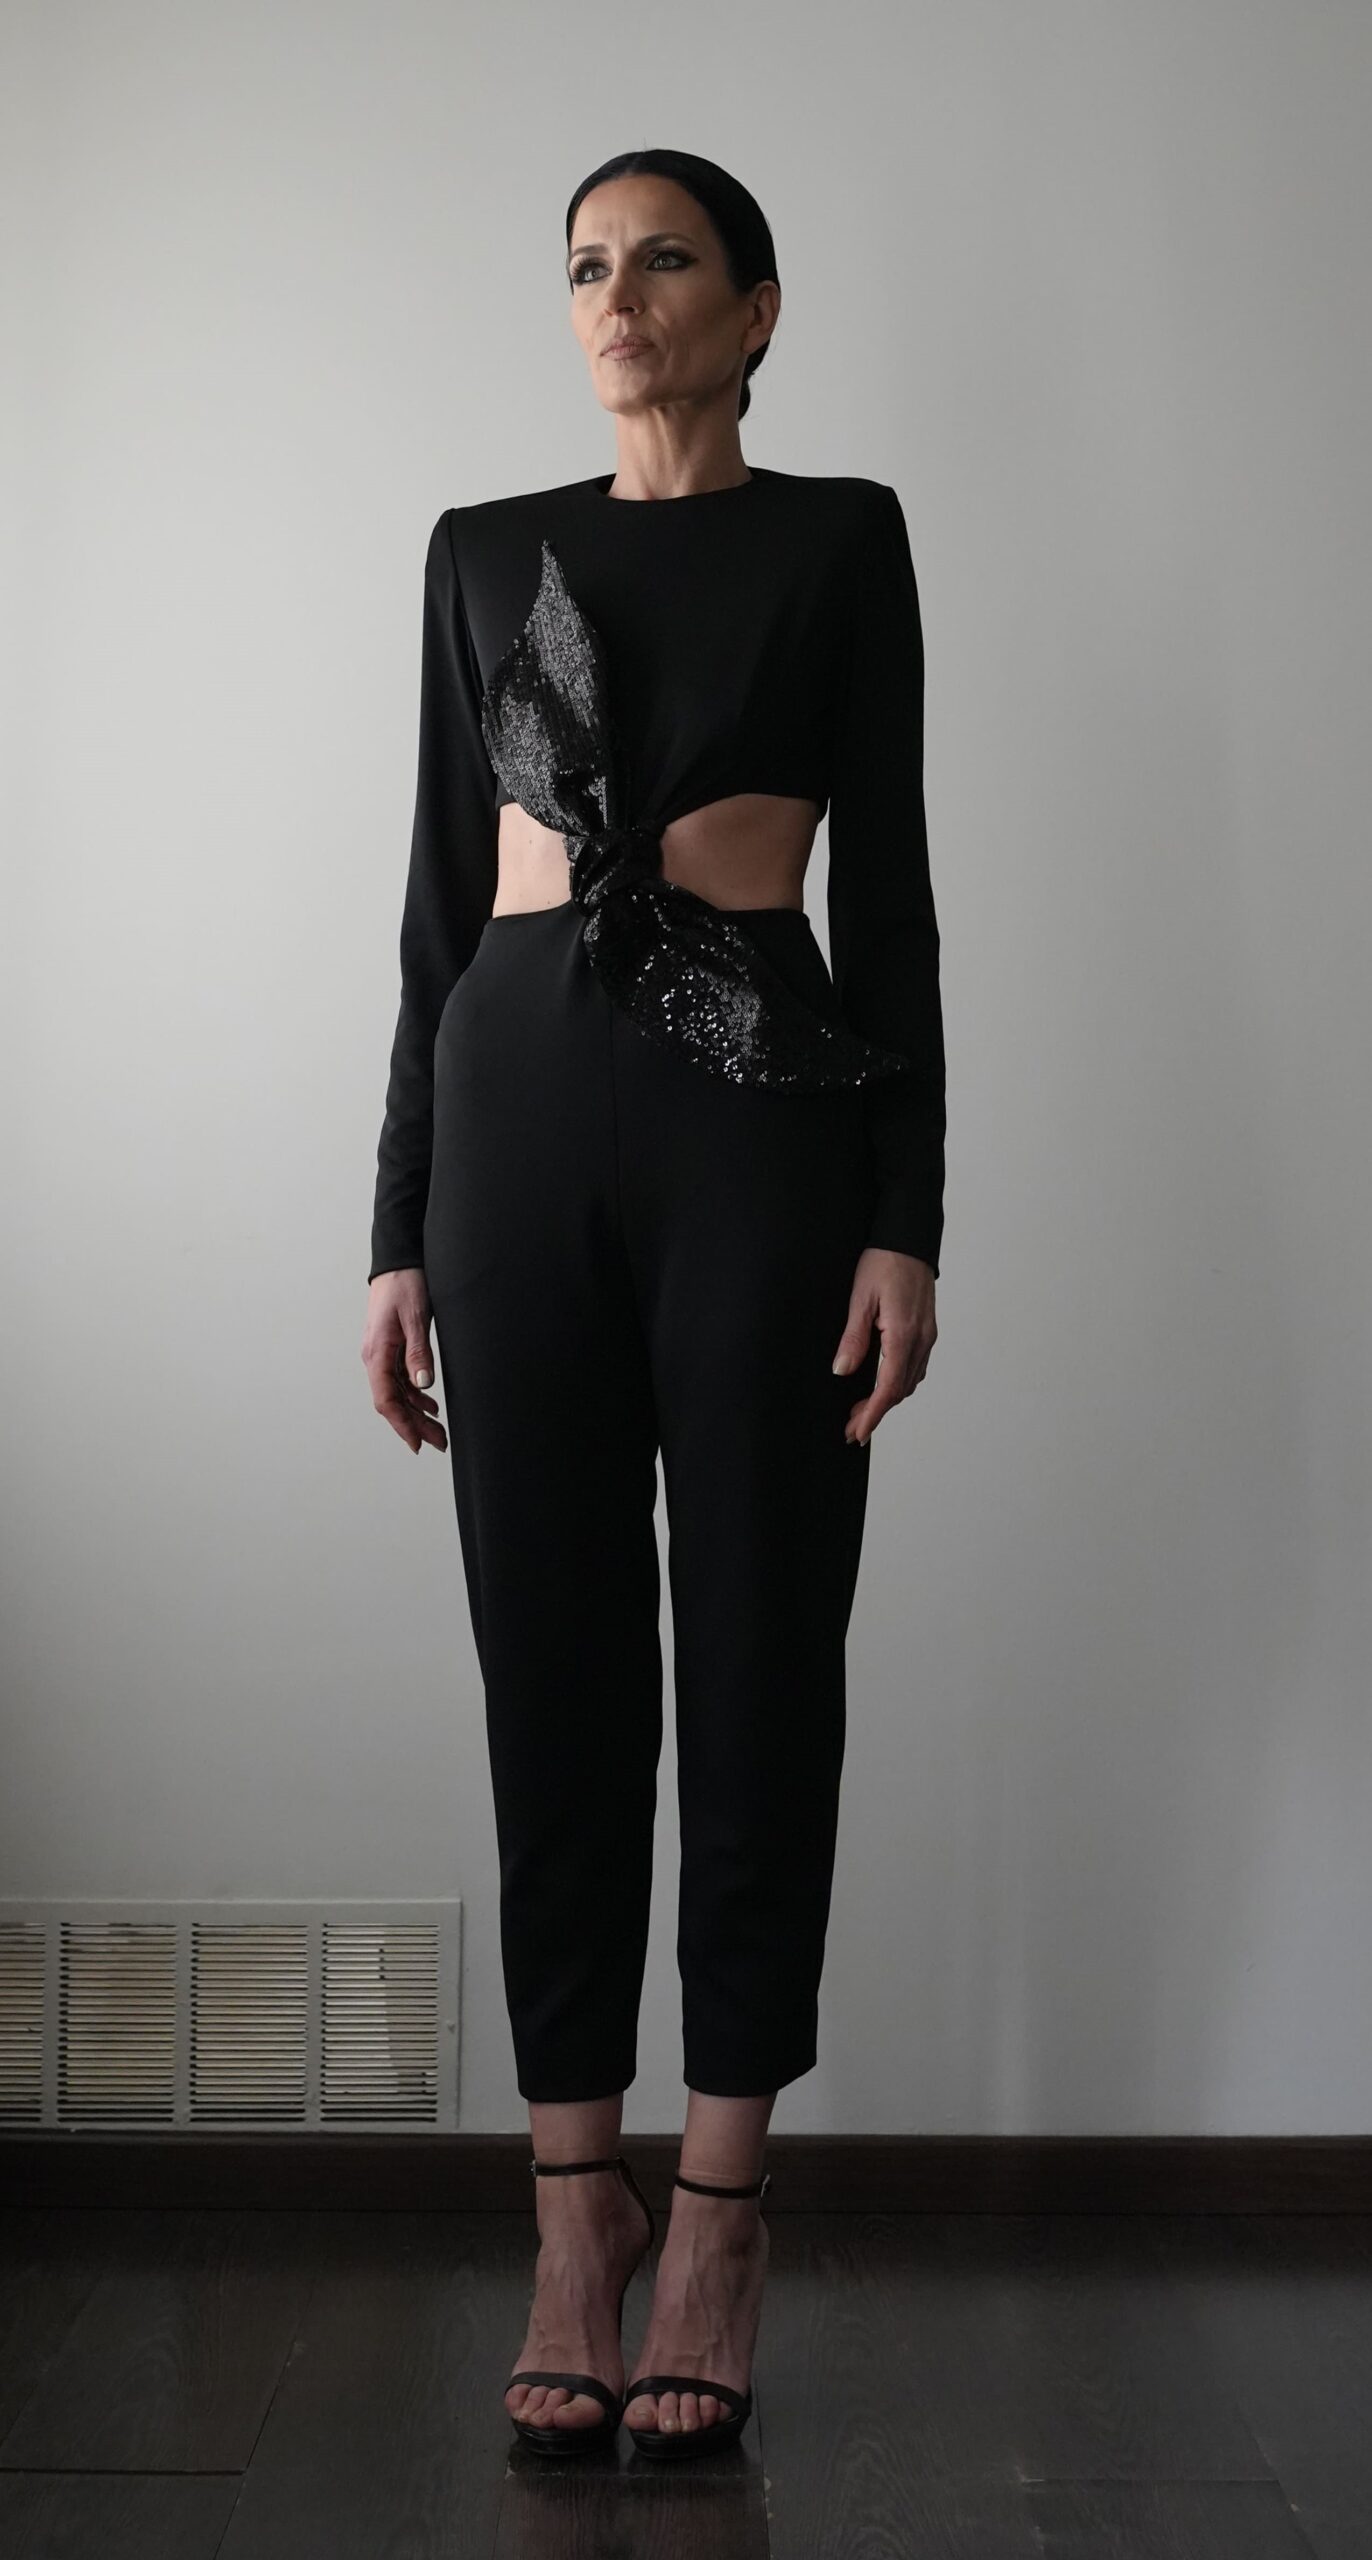 188-Bow-jumpsuit-Veintitres.01-Collection-Flamenco-Fashion-1.jpg